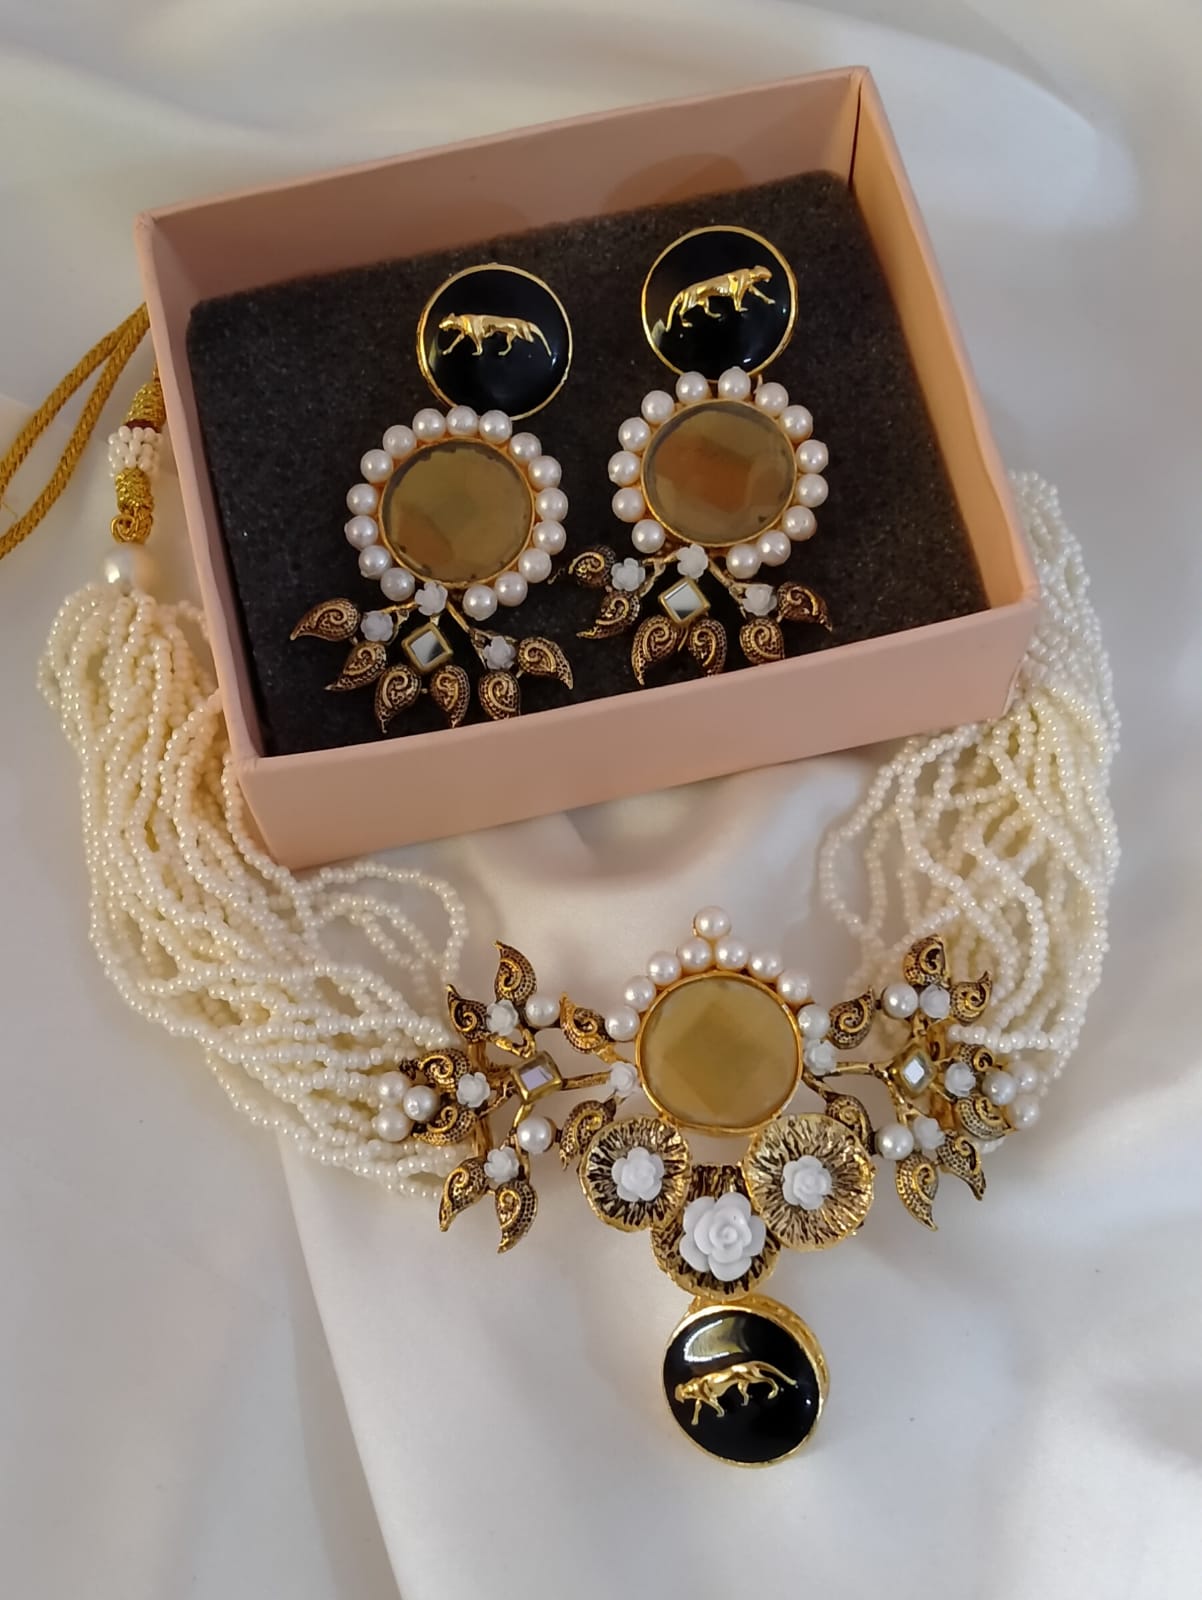 Designer collection  Handmade doubleted kut stones chokkar earring set